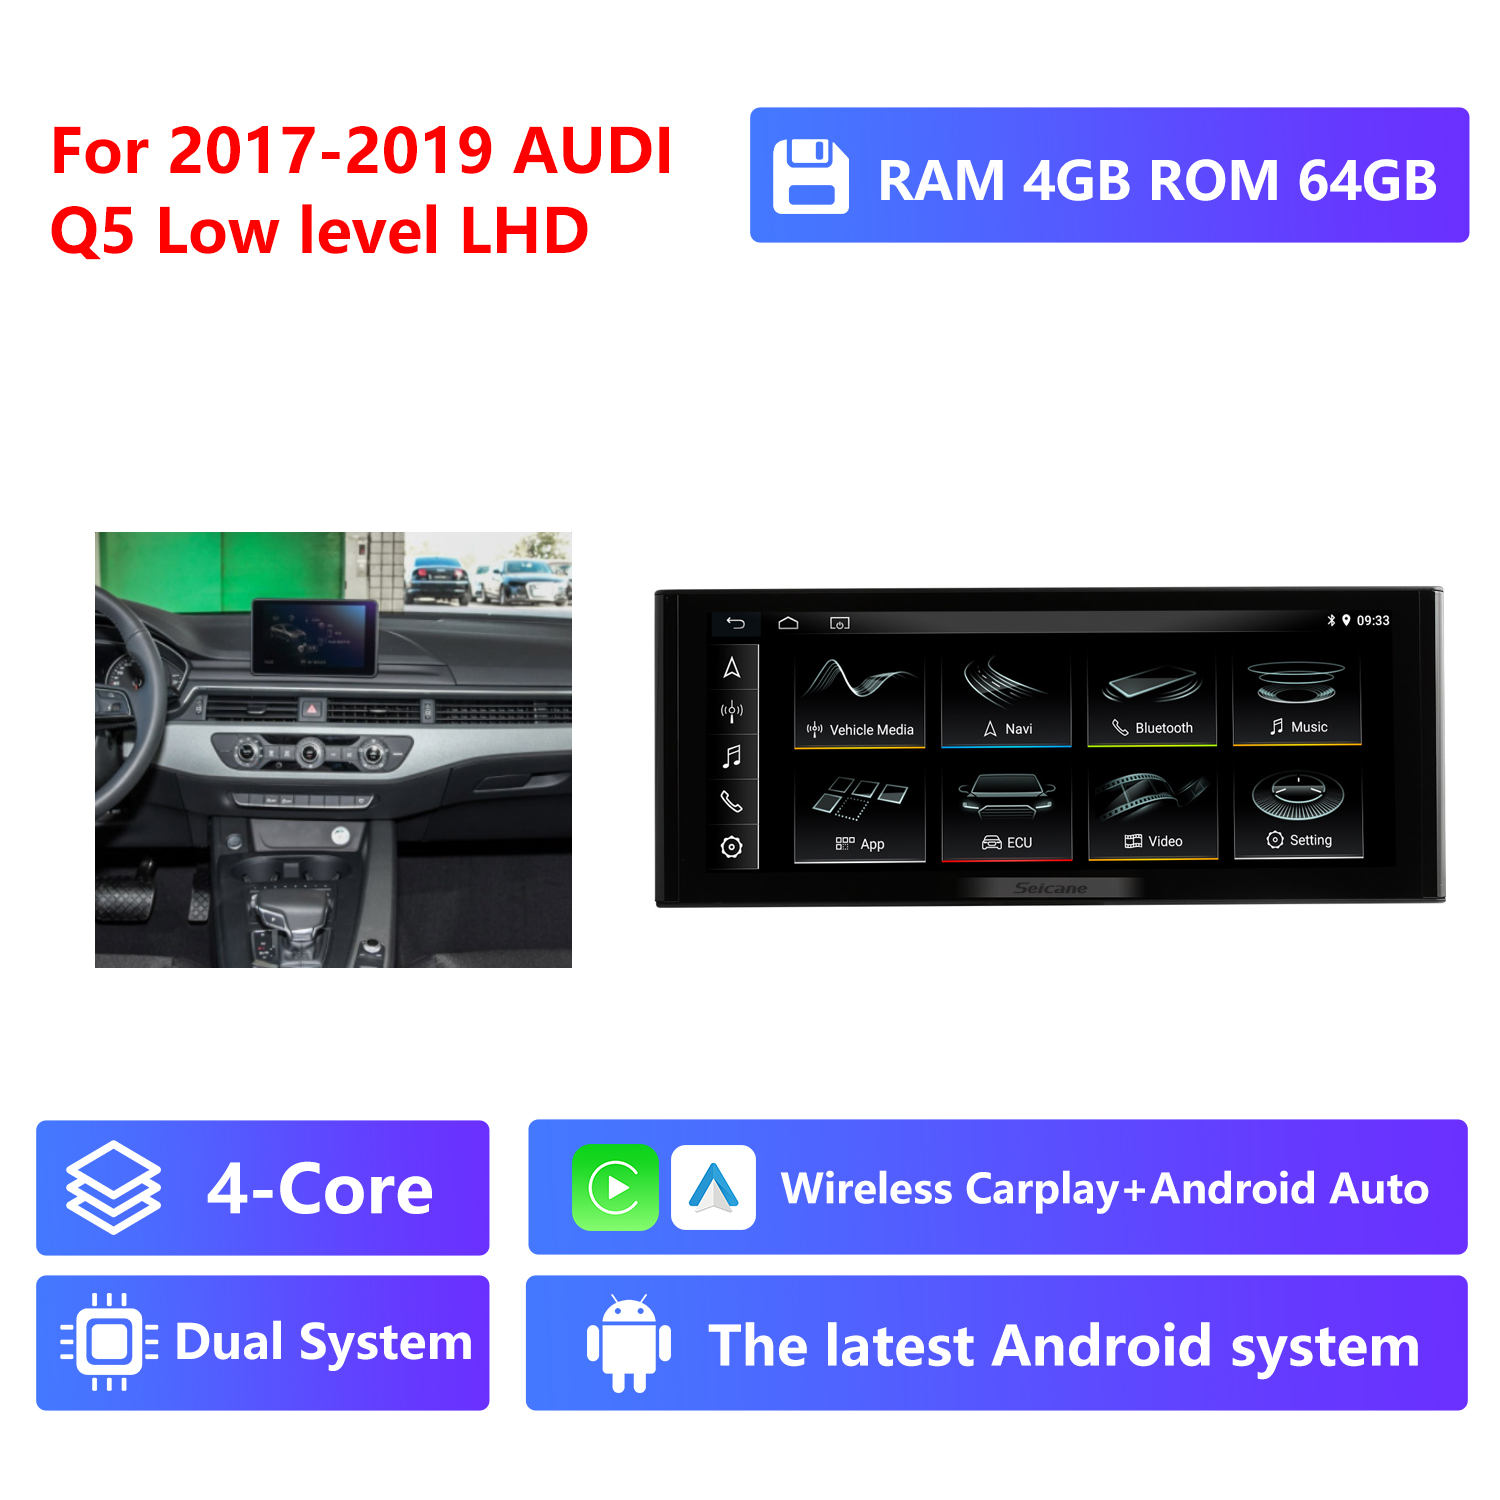 4-Core RAM 4G ROM 64G,2017-2019,Low version,LHD